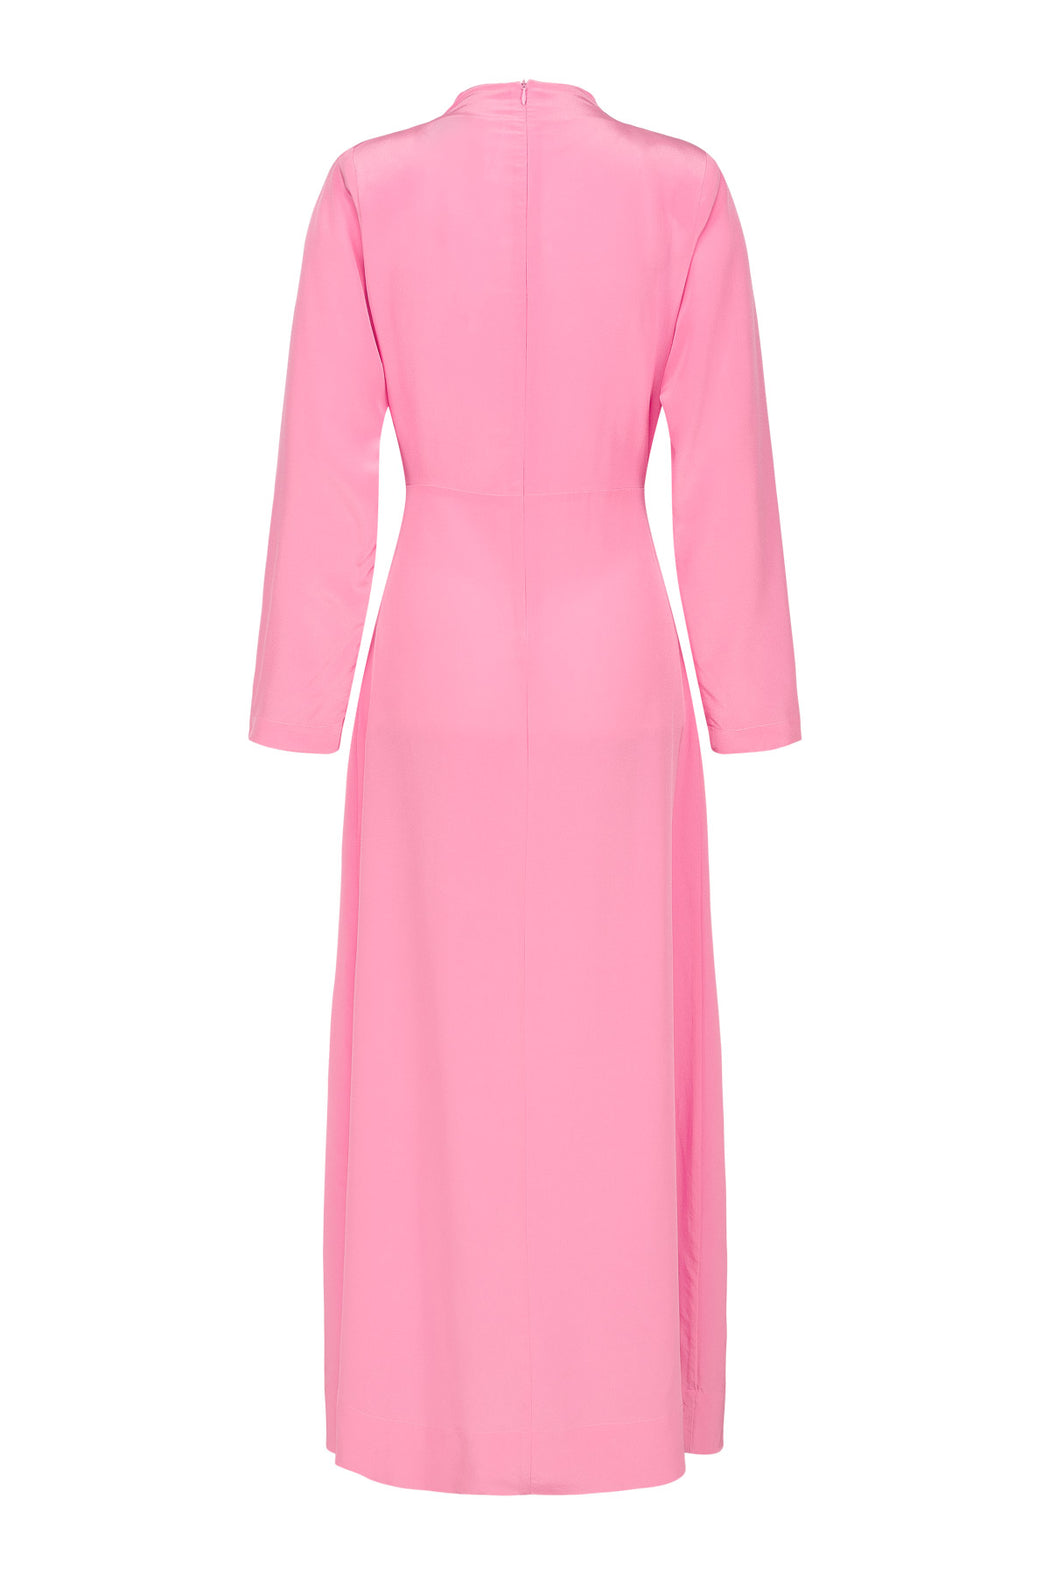 Envelope1976 Campania dress, silk CDC, Pink Dress Pink